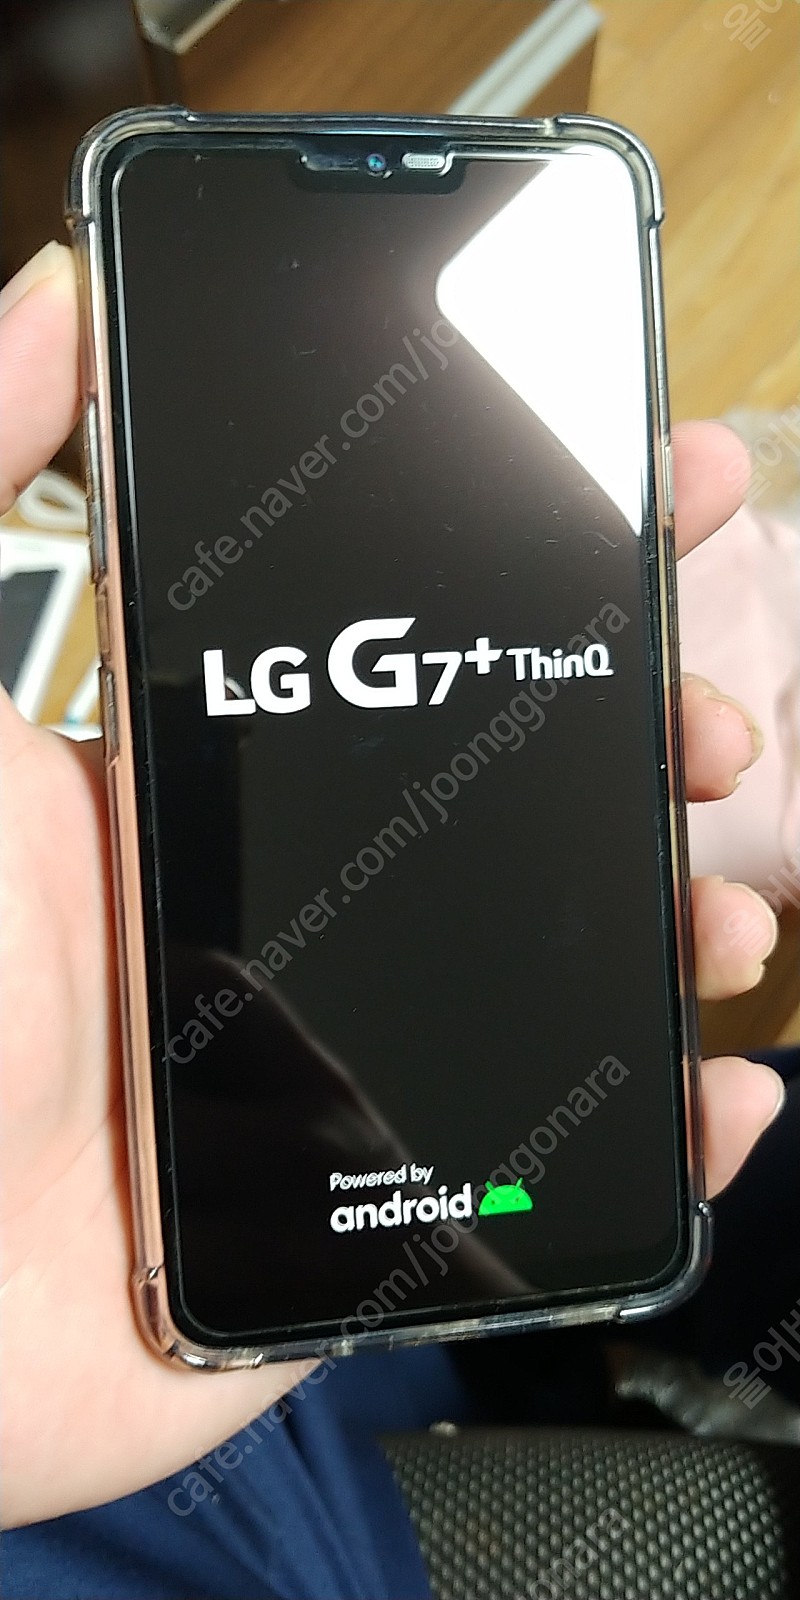 LG G7+ (G7플러스) 6G/128G S급 7만원 팔아요.